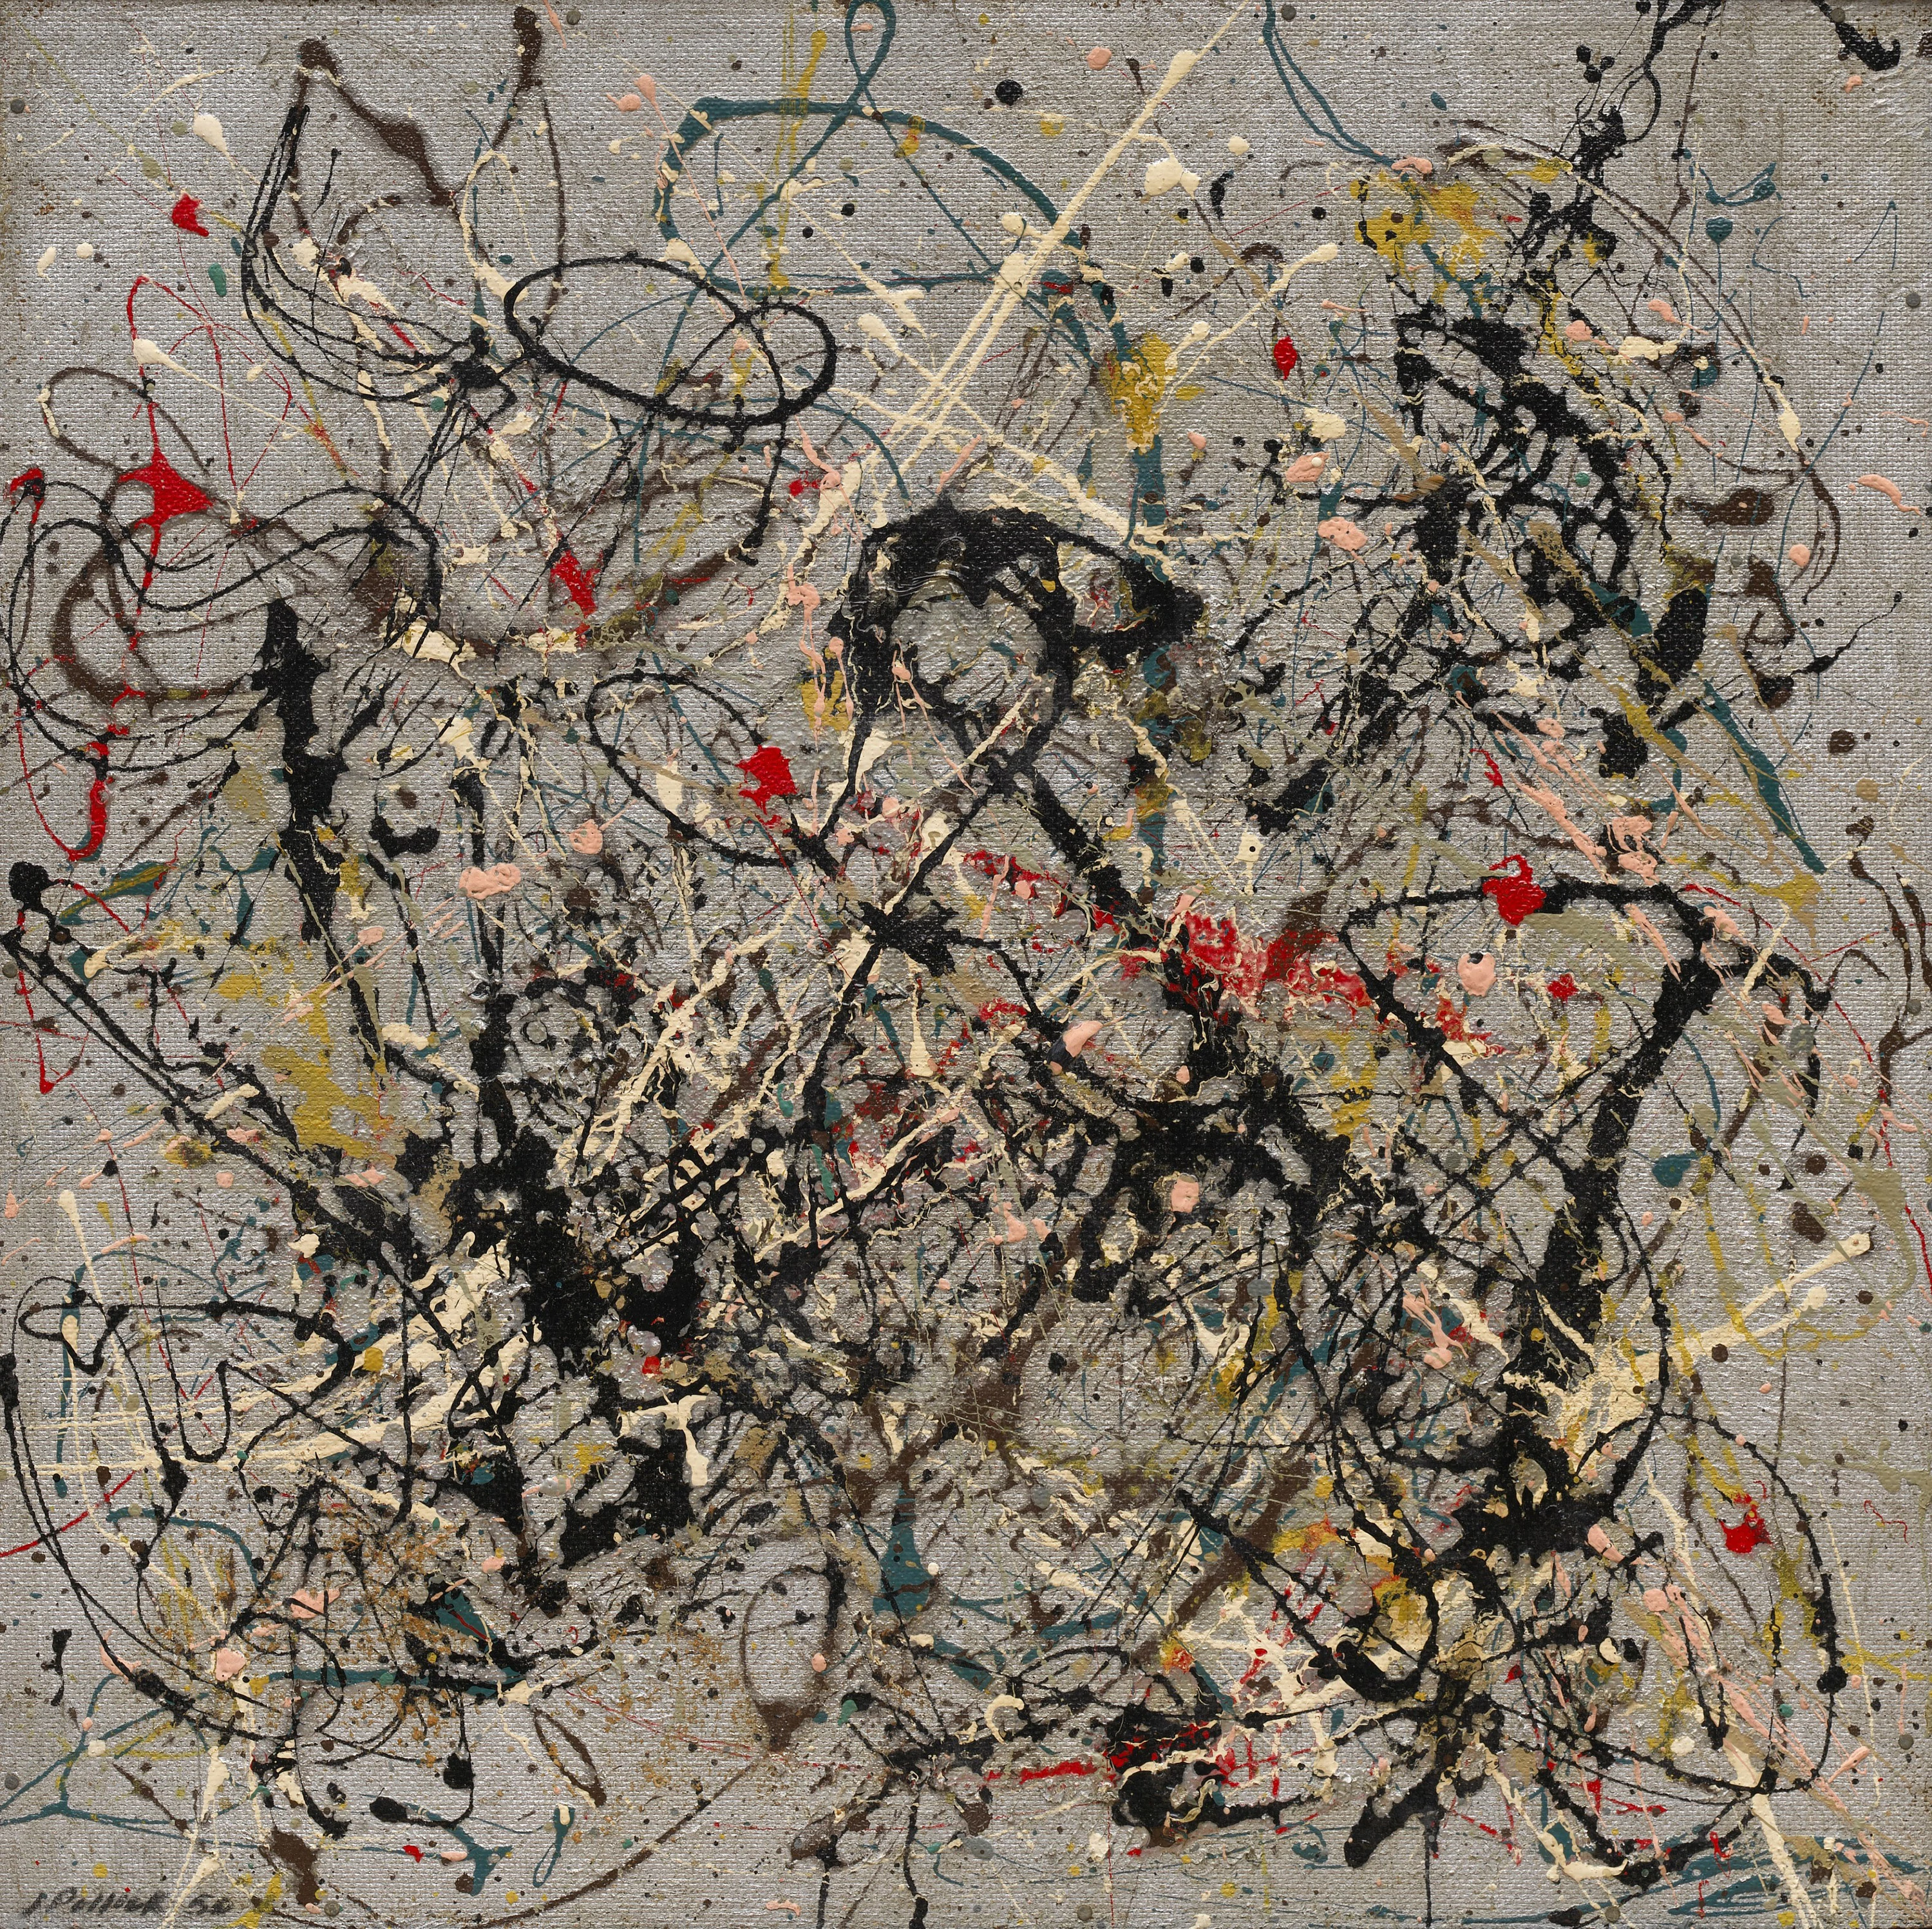 Number 18, Jackson Pollock